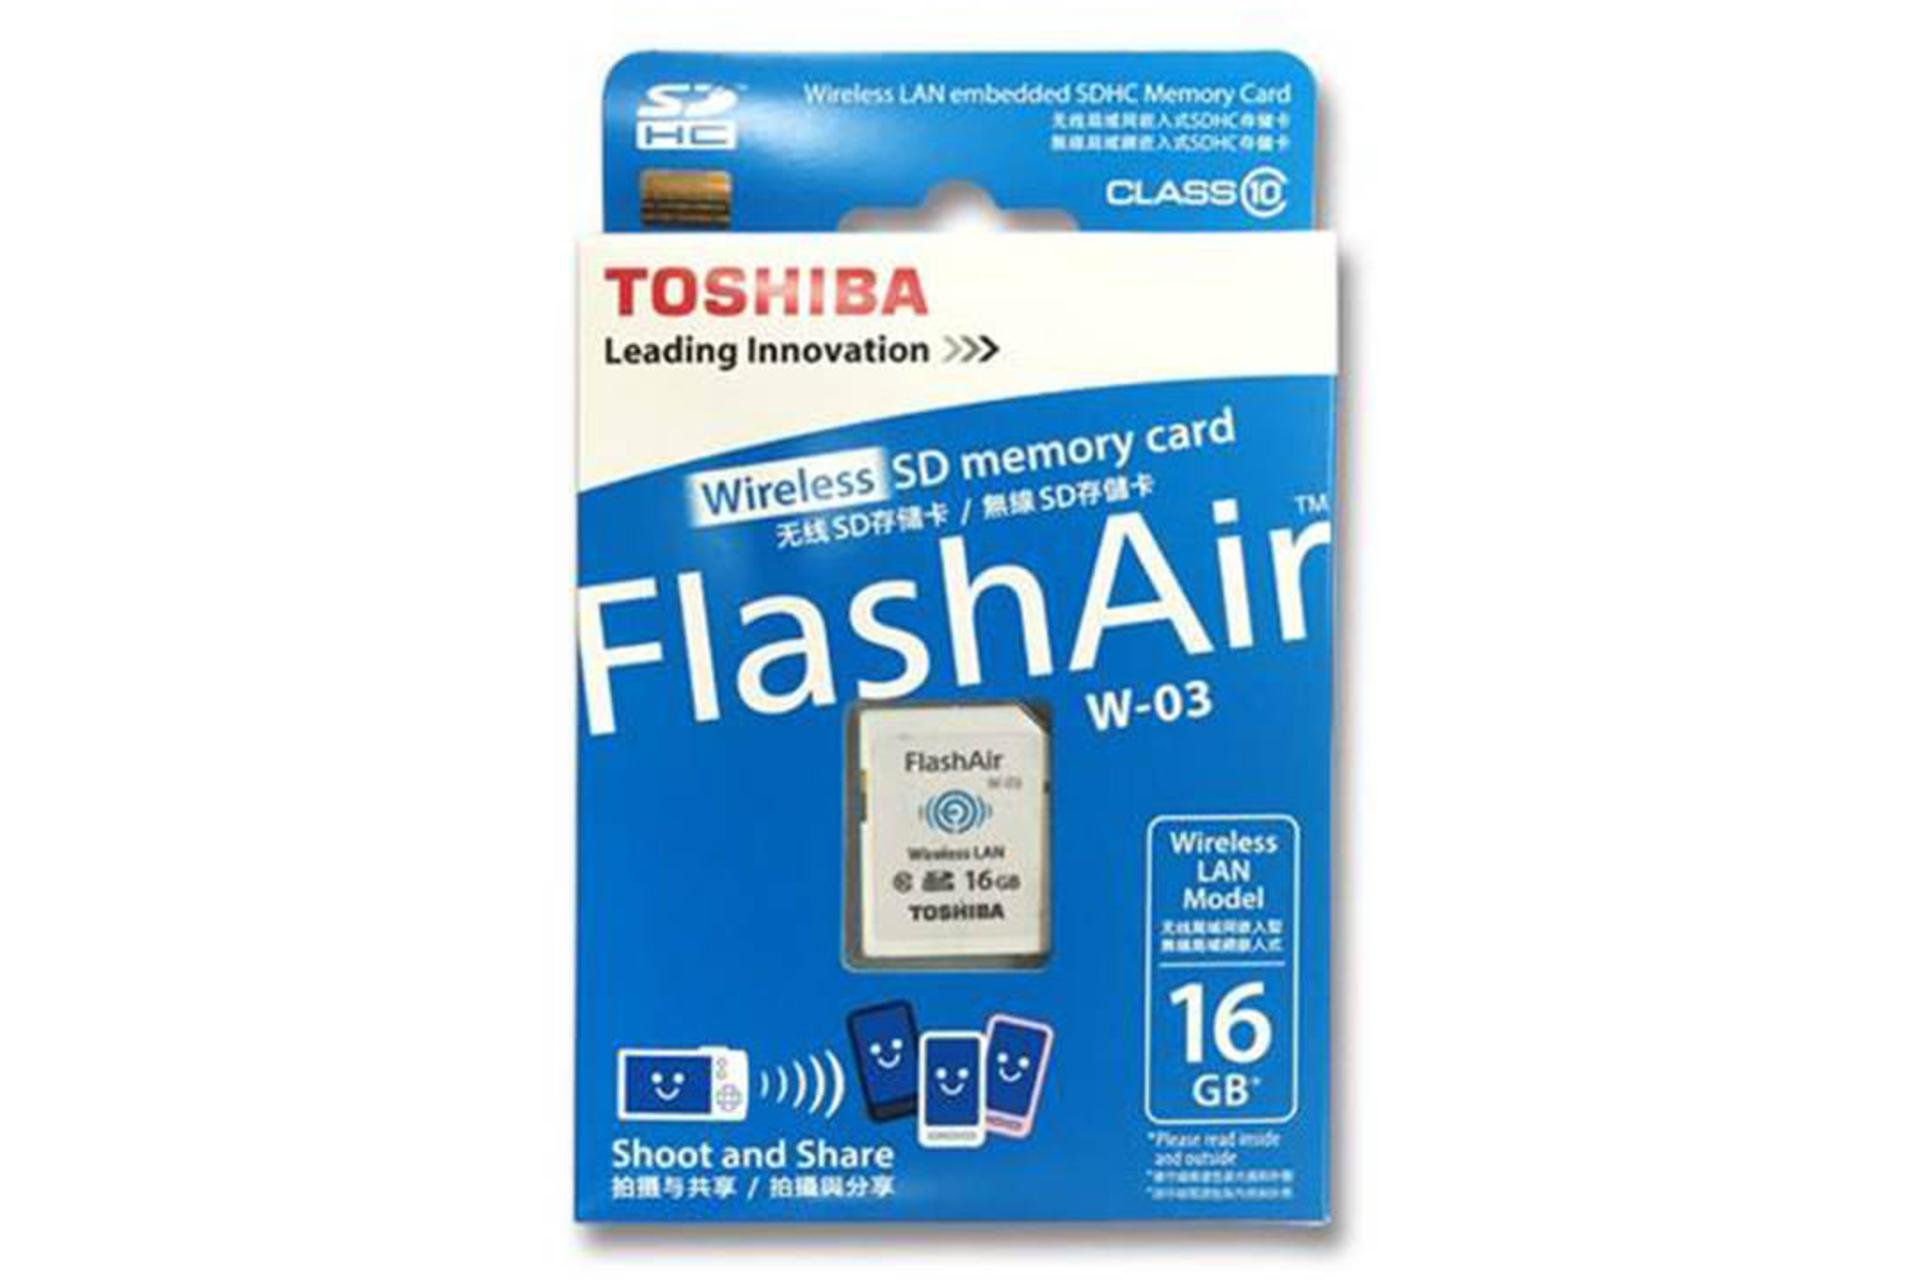 Toshiba Flash Air W-03 SDHC Class 10 16GB